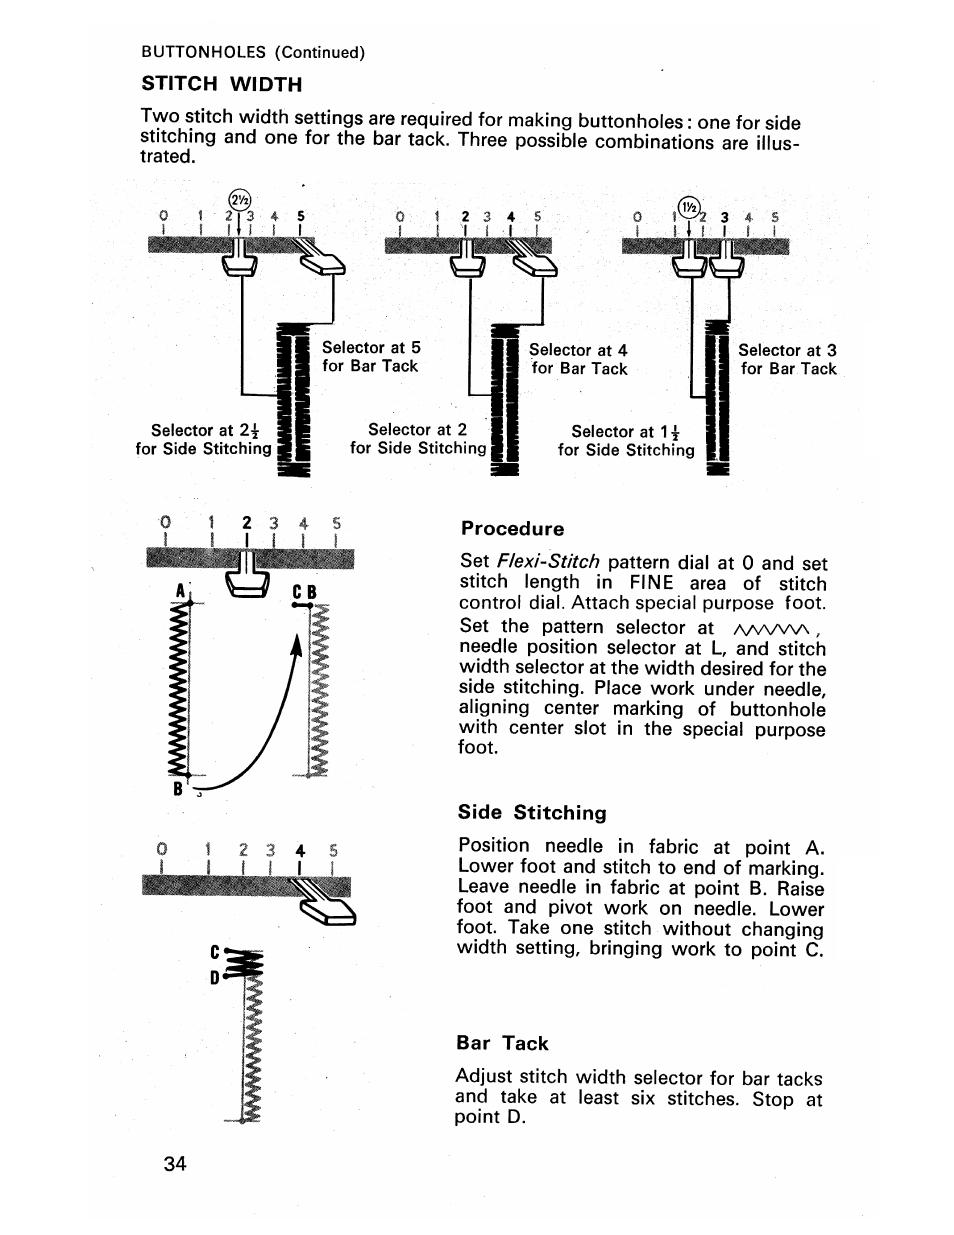 Stitch width, Procedure, Side stitching | Bar tack, Satin stitching | SINGER 413 User Manual | Page 36 / 64